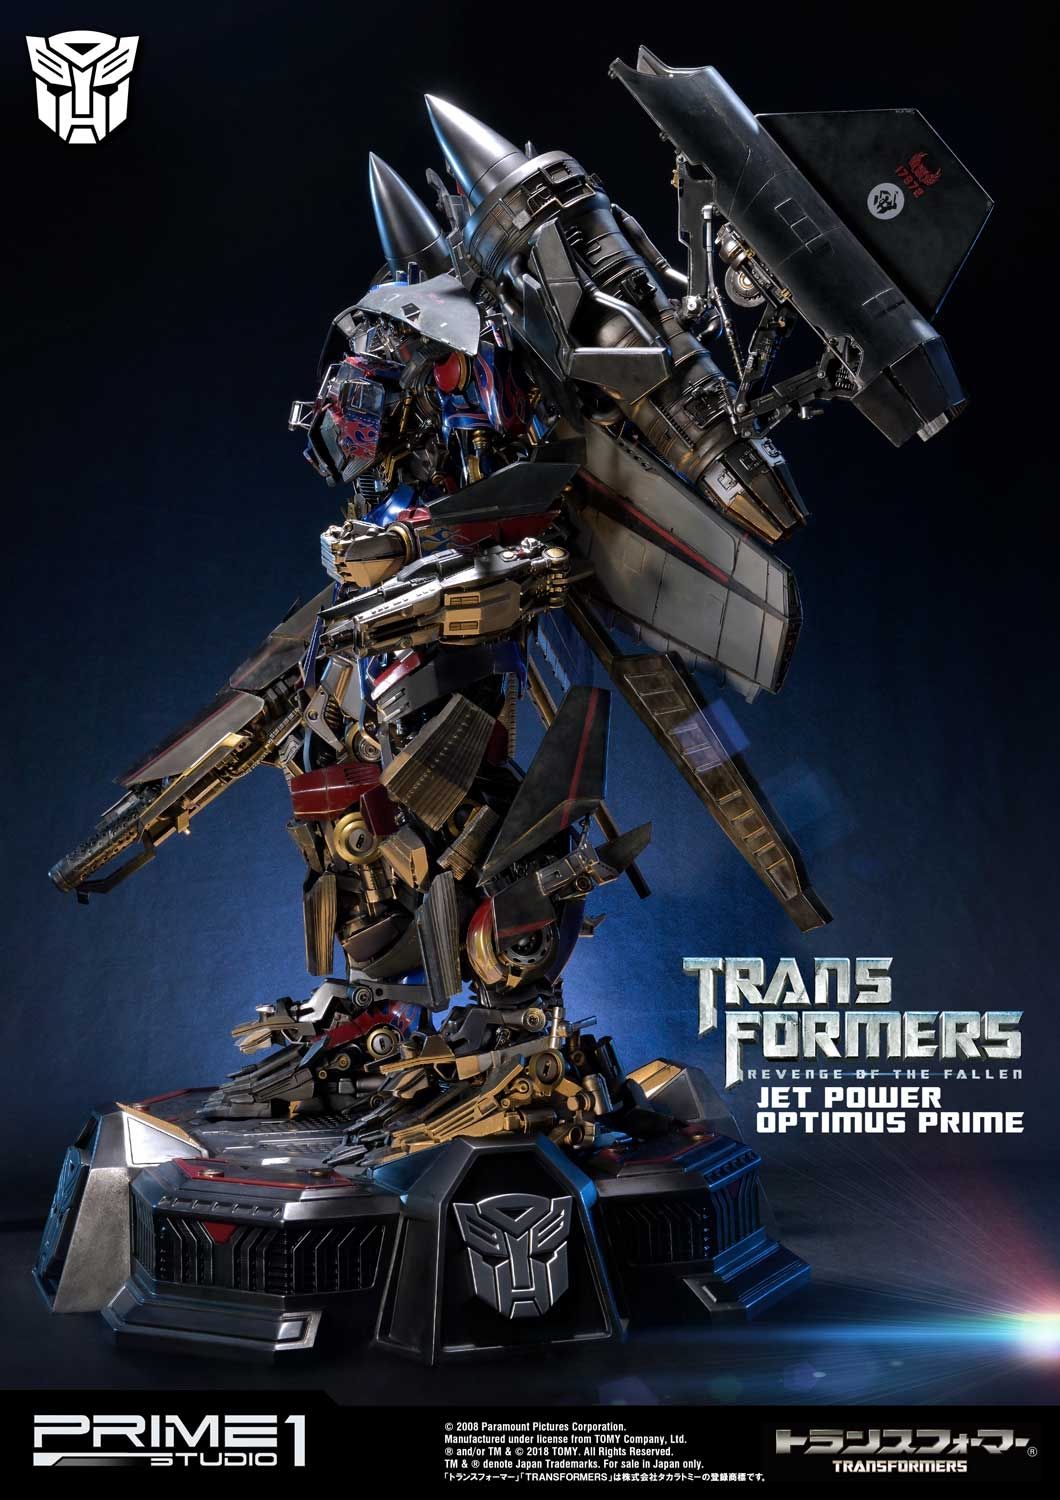 Transformers: Revenge of the Fallen - Jetpower Optimus Prime 37” Prime 1 Studios Statue